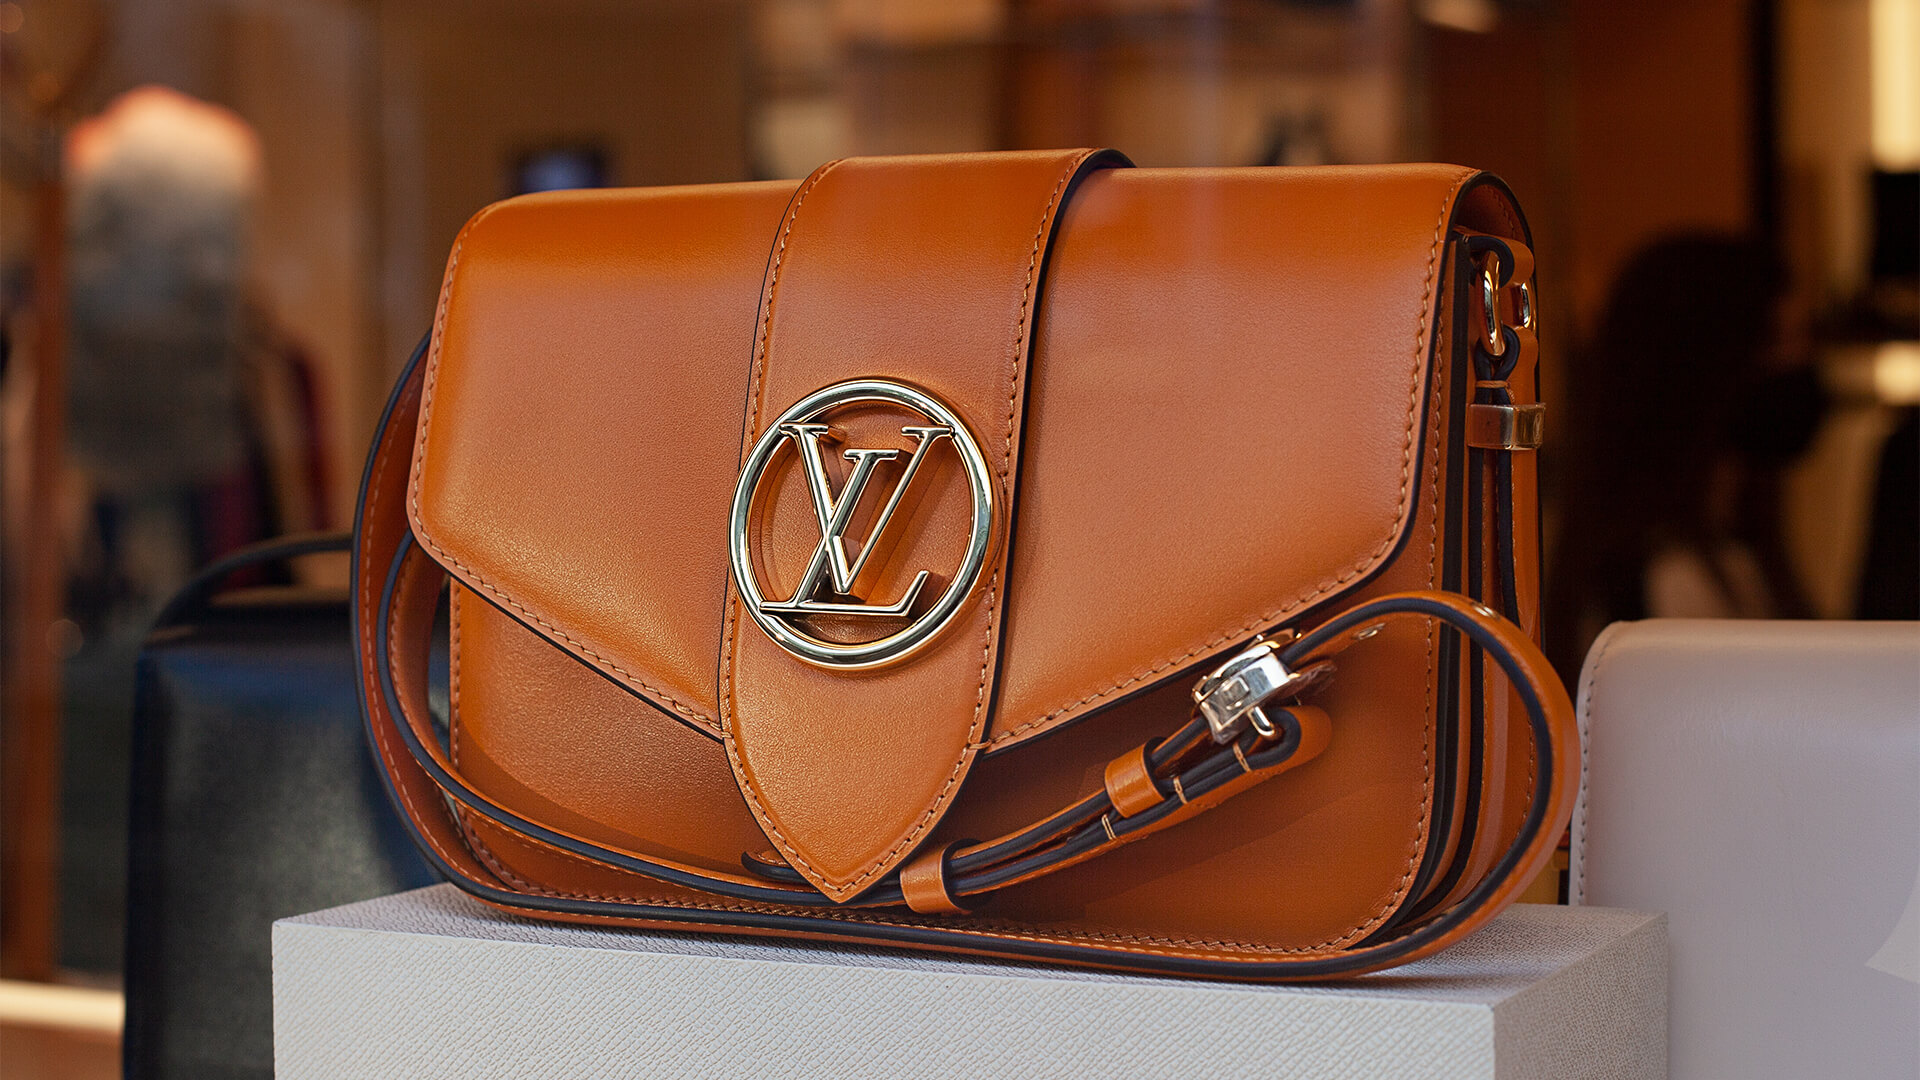 Louis Vuitton Handbags in Pakistan!